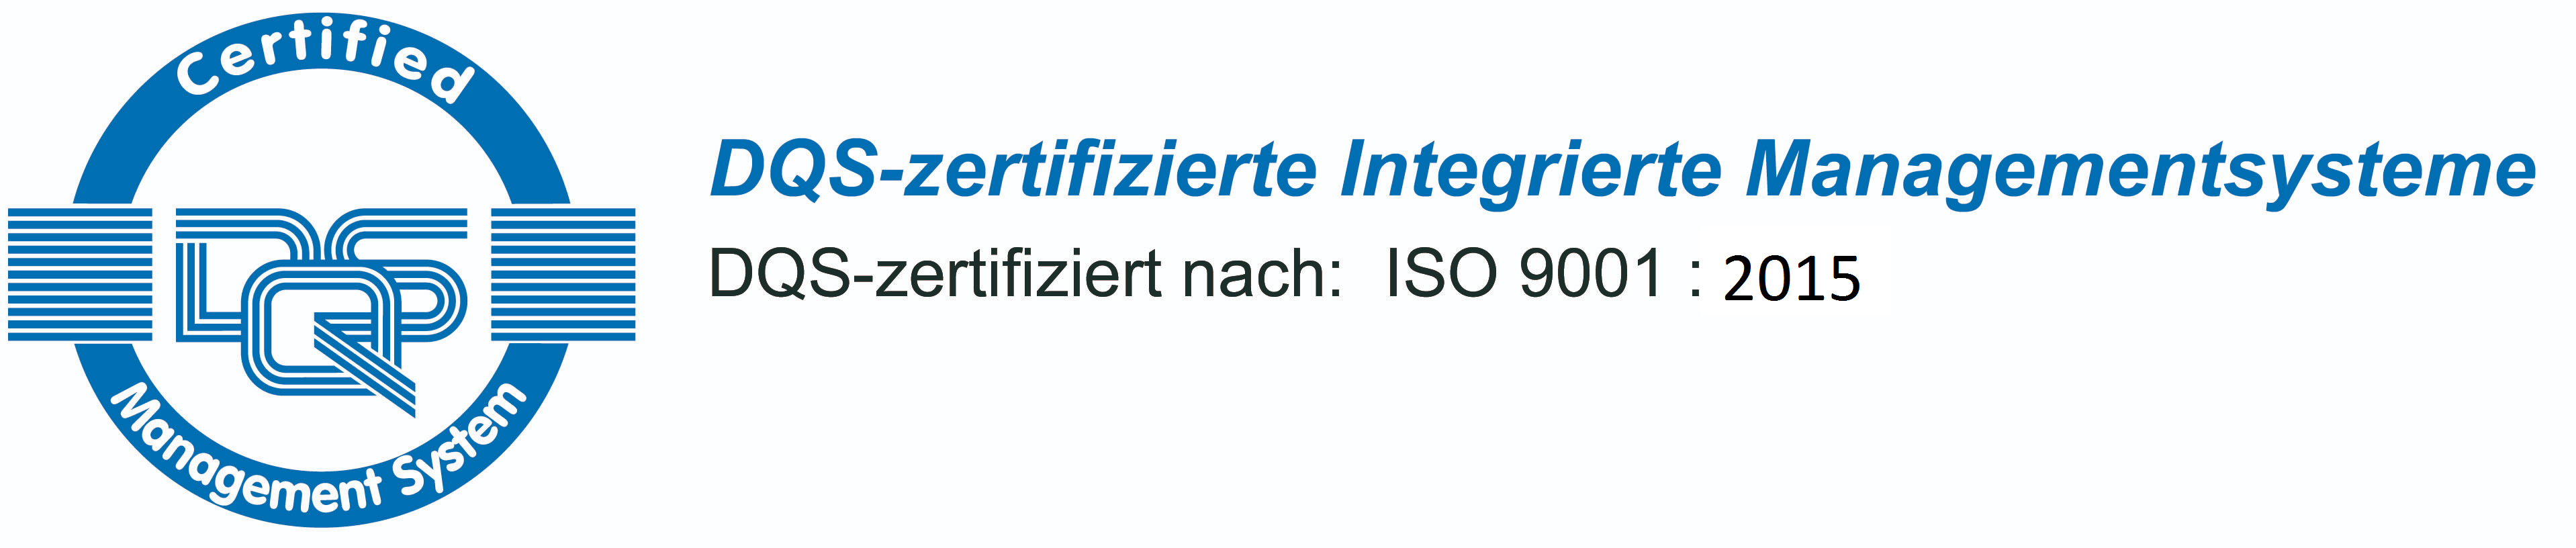 DQS-zertifizierte Integrierte Managementsysteme nach ISO 9001: 2015